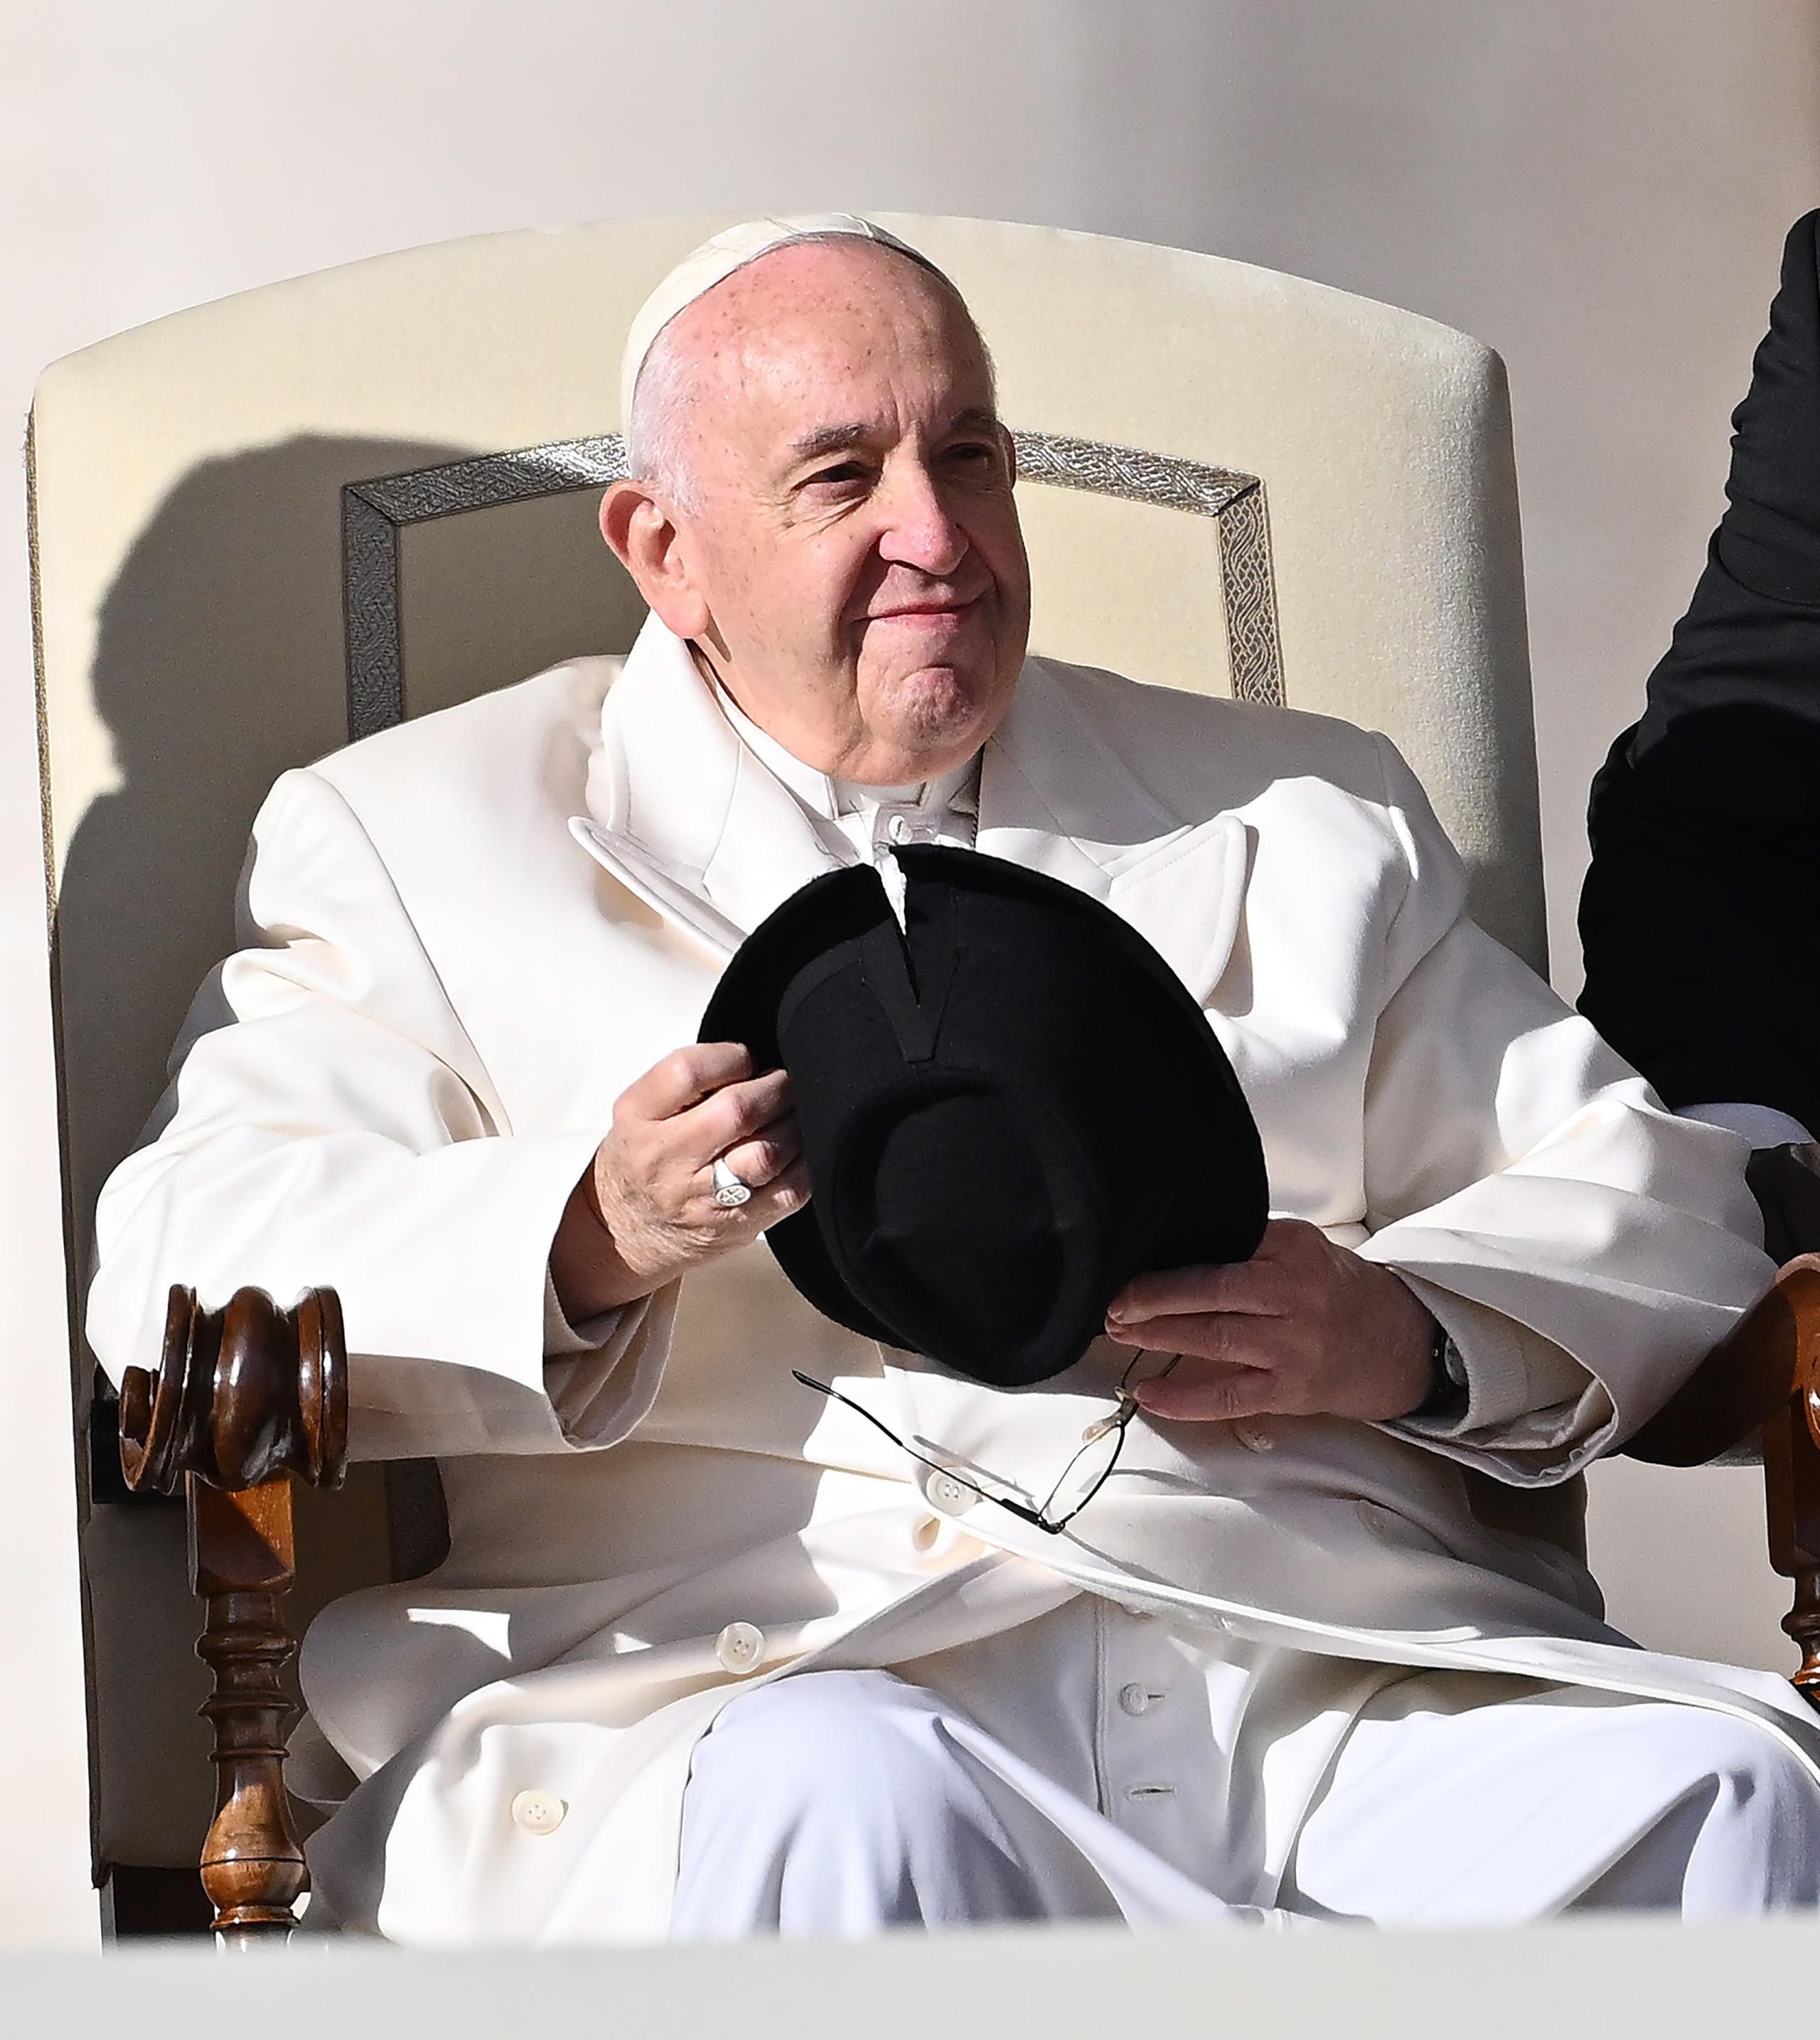 El papa Francisco.
(EFE/EPA/ETTORE FERRARI ITALY OUT)